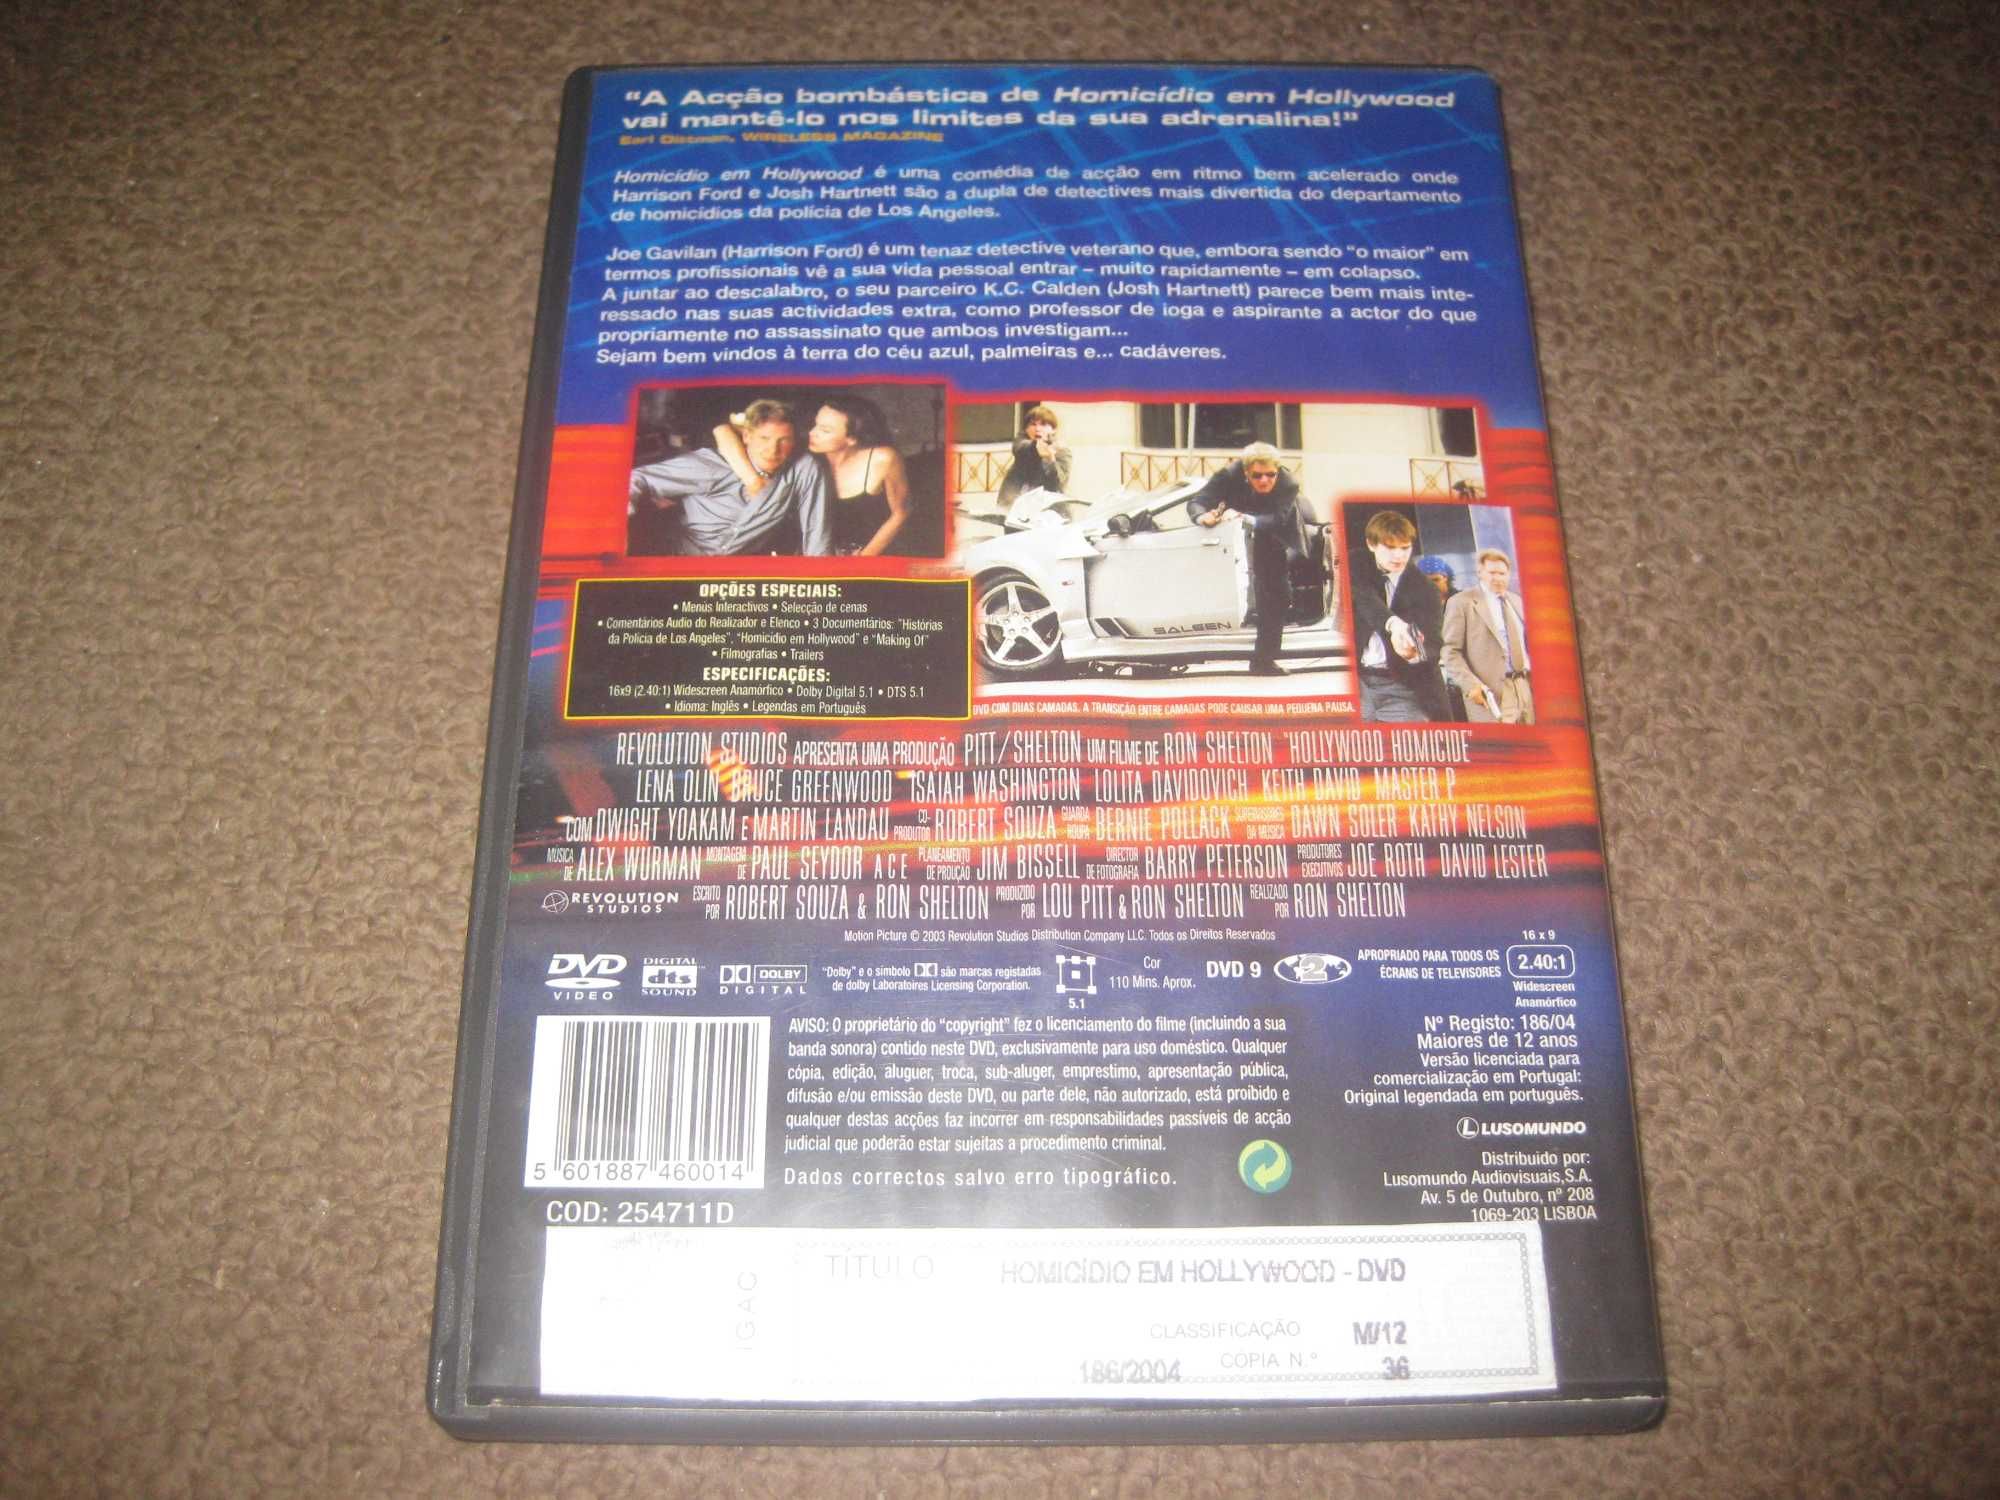 DVD "Homicídio em Hollywood" com Harrison Ford